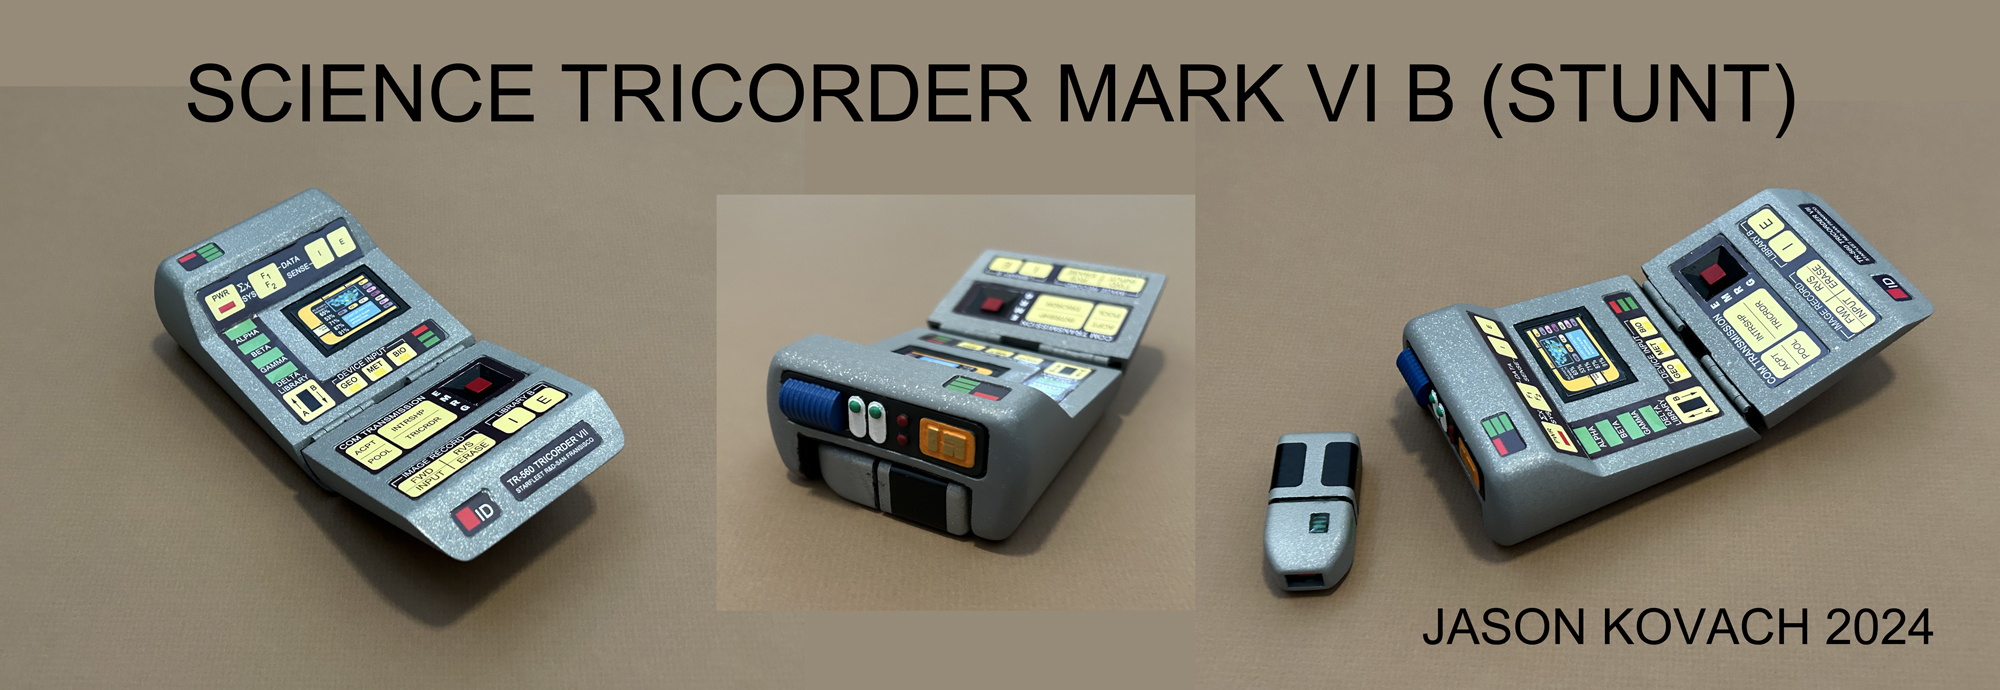 Science Tricorder Mark VI B 2024 Post.jpg